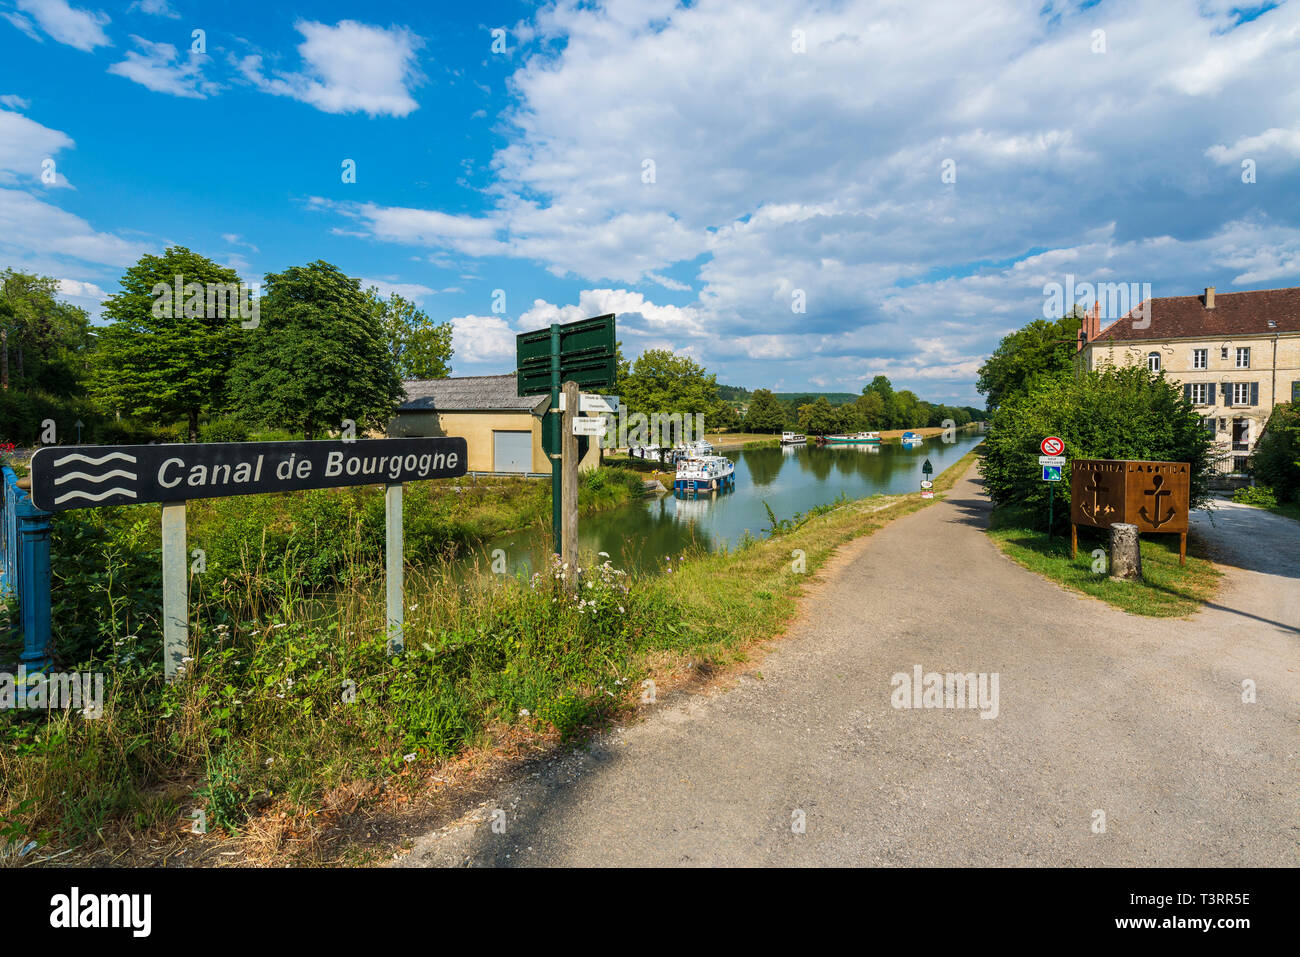 Ancy-le-Franc (Francia nord-orientale): chiatte sul Canale di Borgogna (francese: Canal de Bourgogne) *** Caption locale *** Foto Stock